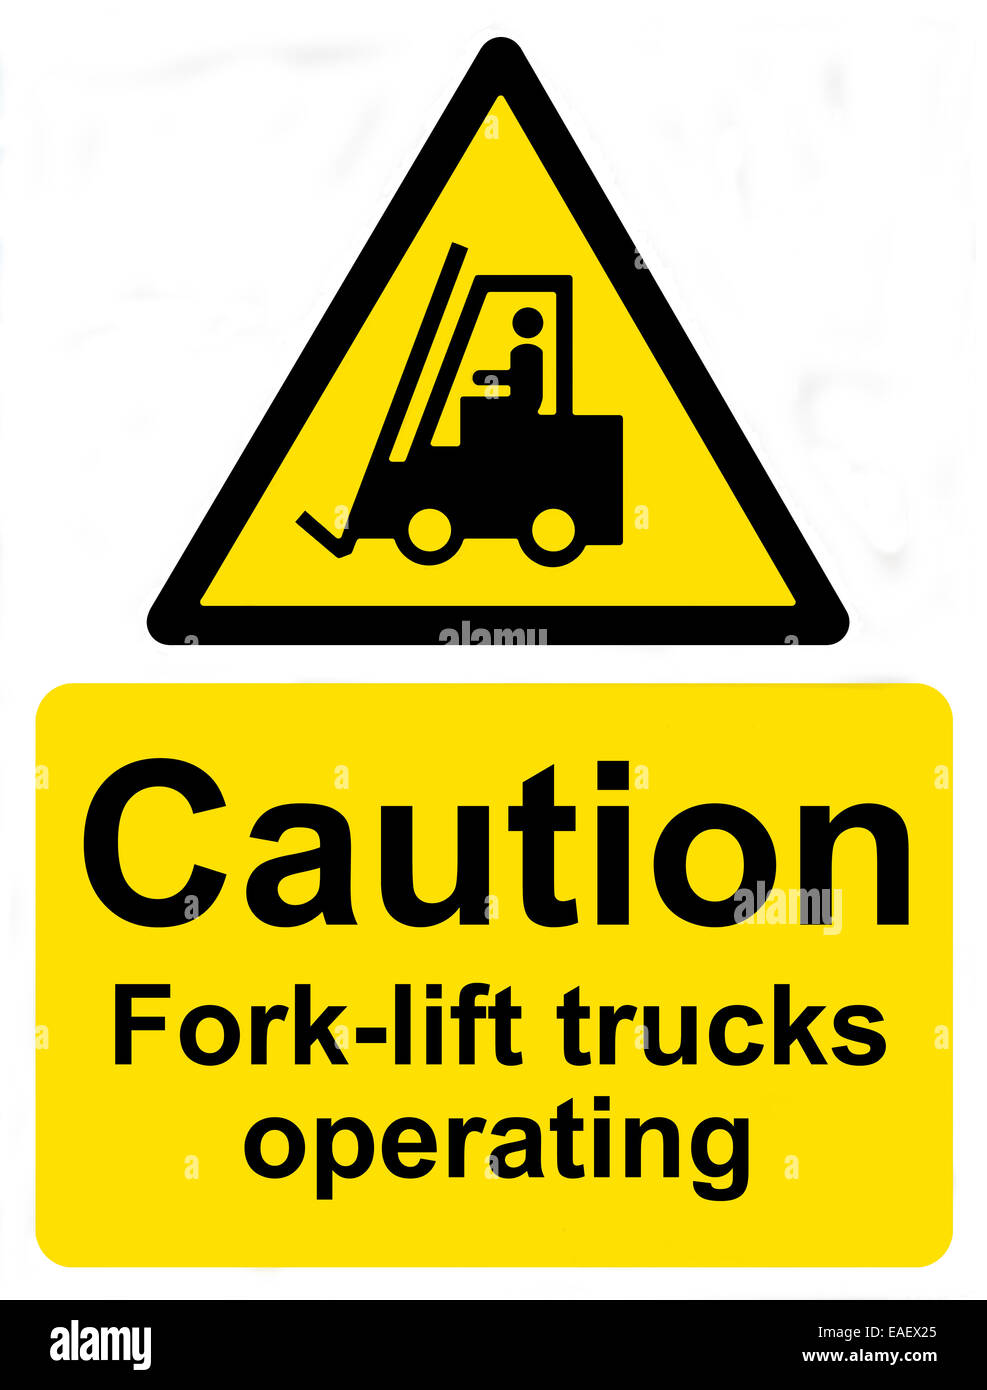 Caution Fork-lift trucks operating sign Stock Photo